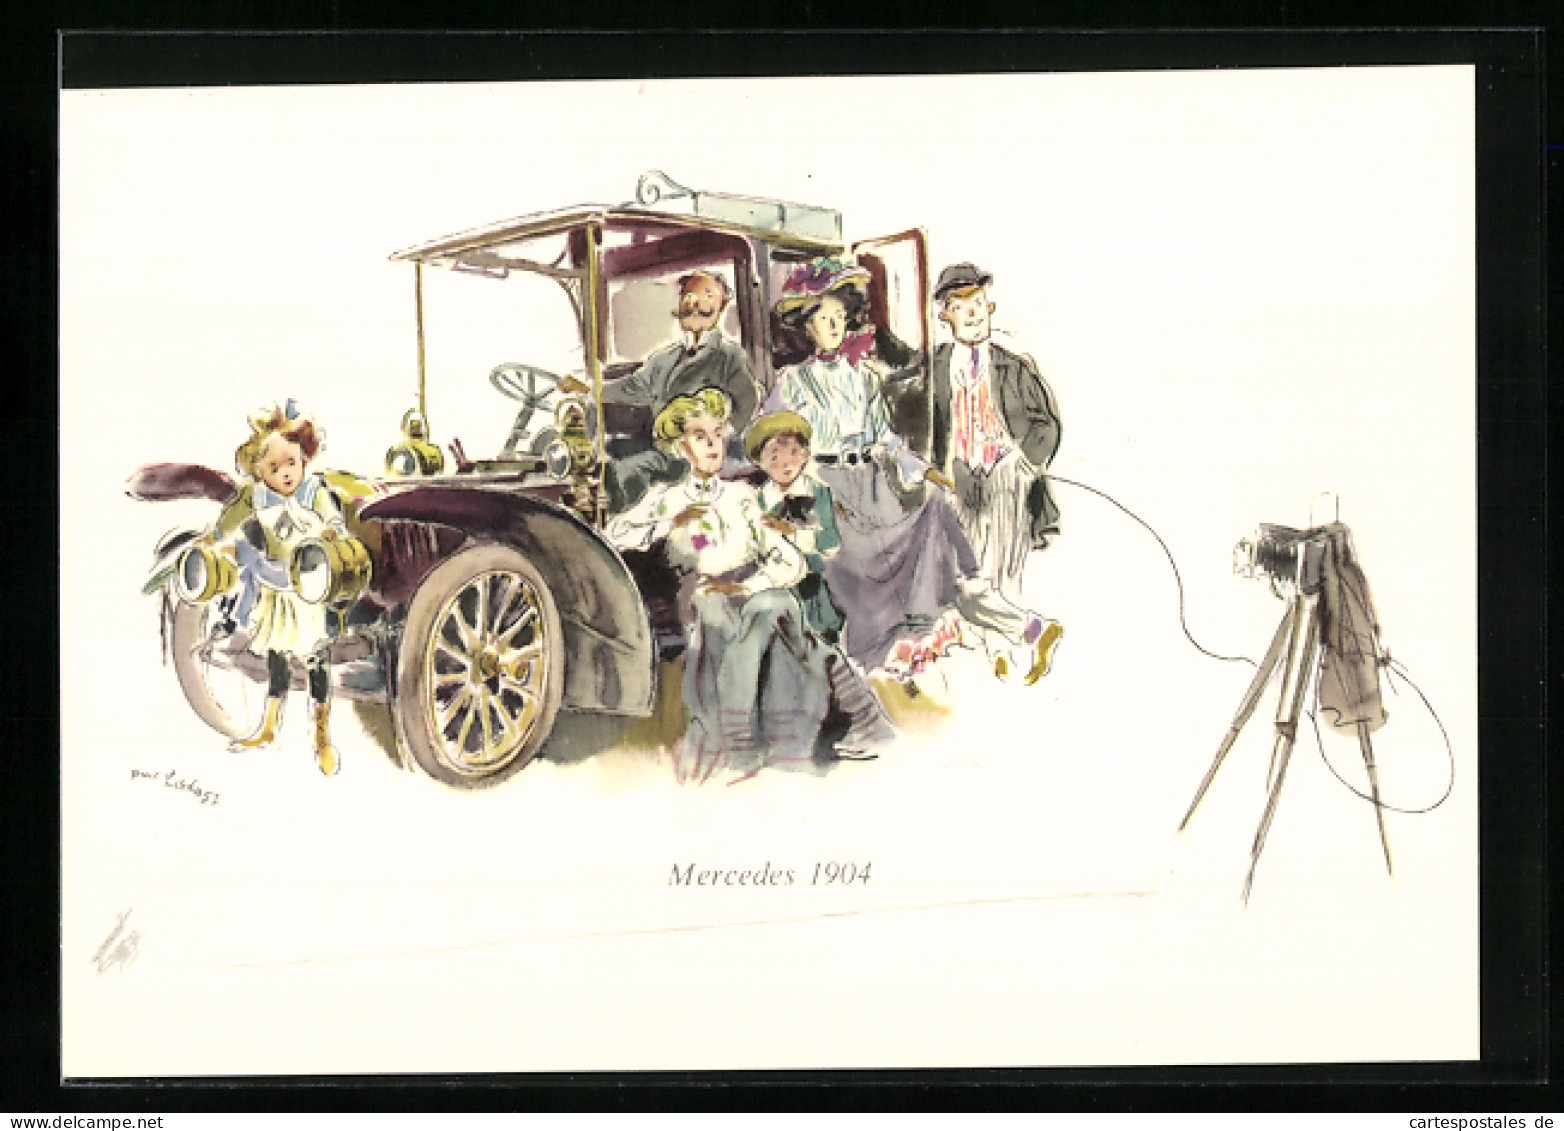 AK Fotoapparat Fotografiert Leute In Einem Mercedes 1904  - PKW